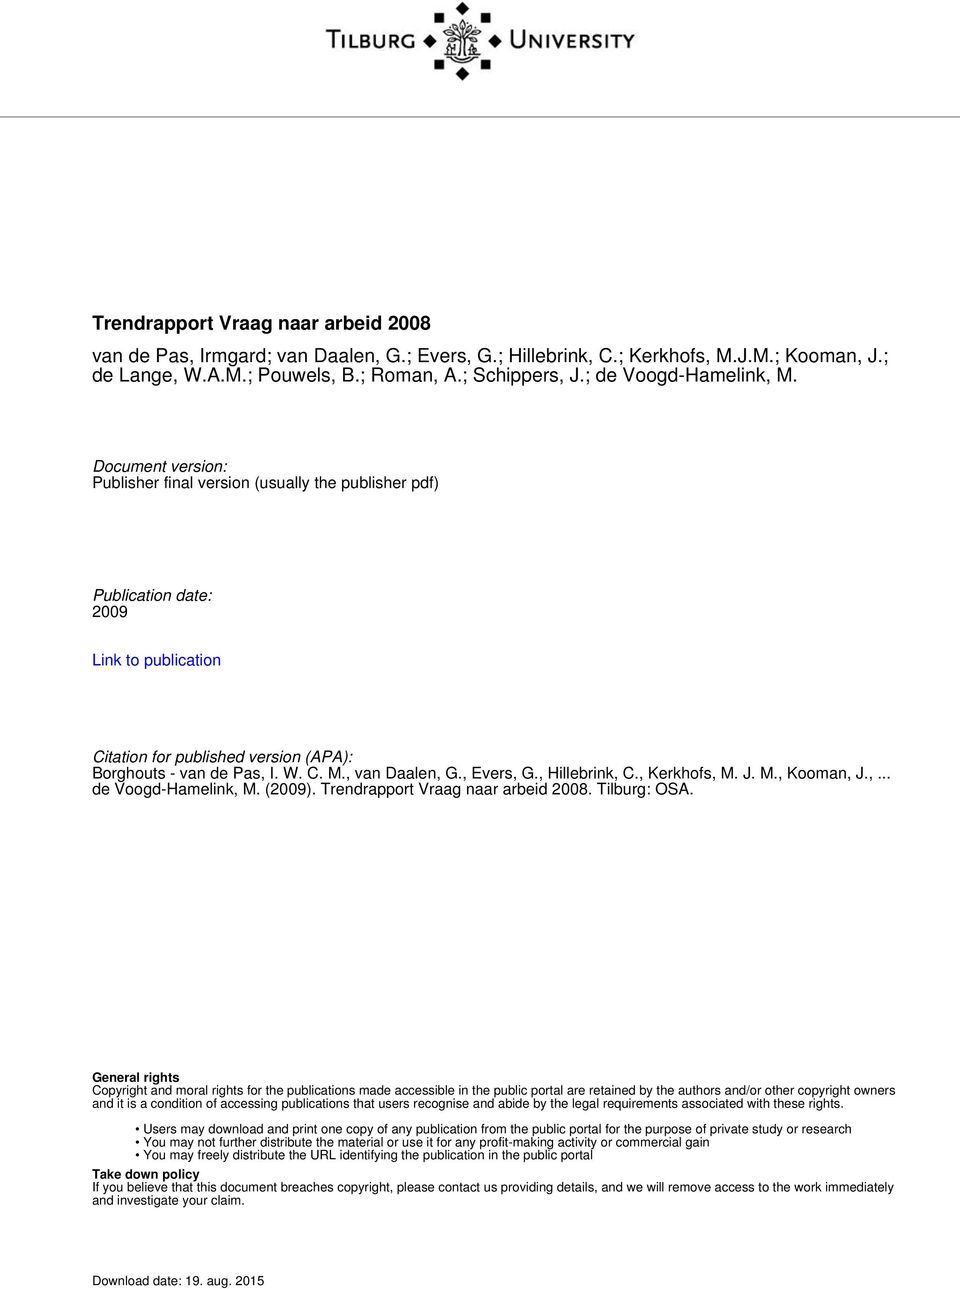 Document version: Publisher final version (usually the publisher pdf) Publication date: 2009 Link to publication Citation for published version (APA): Borghouts - van de Pas, I. W. C. M.